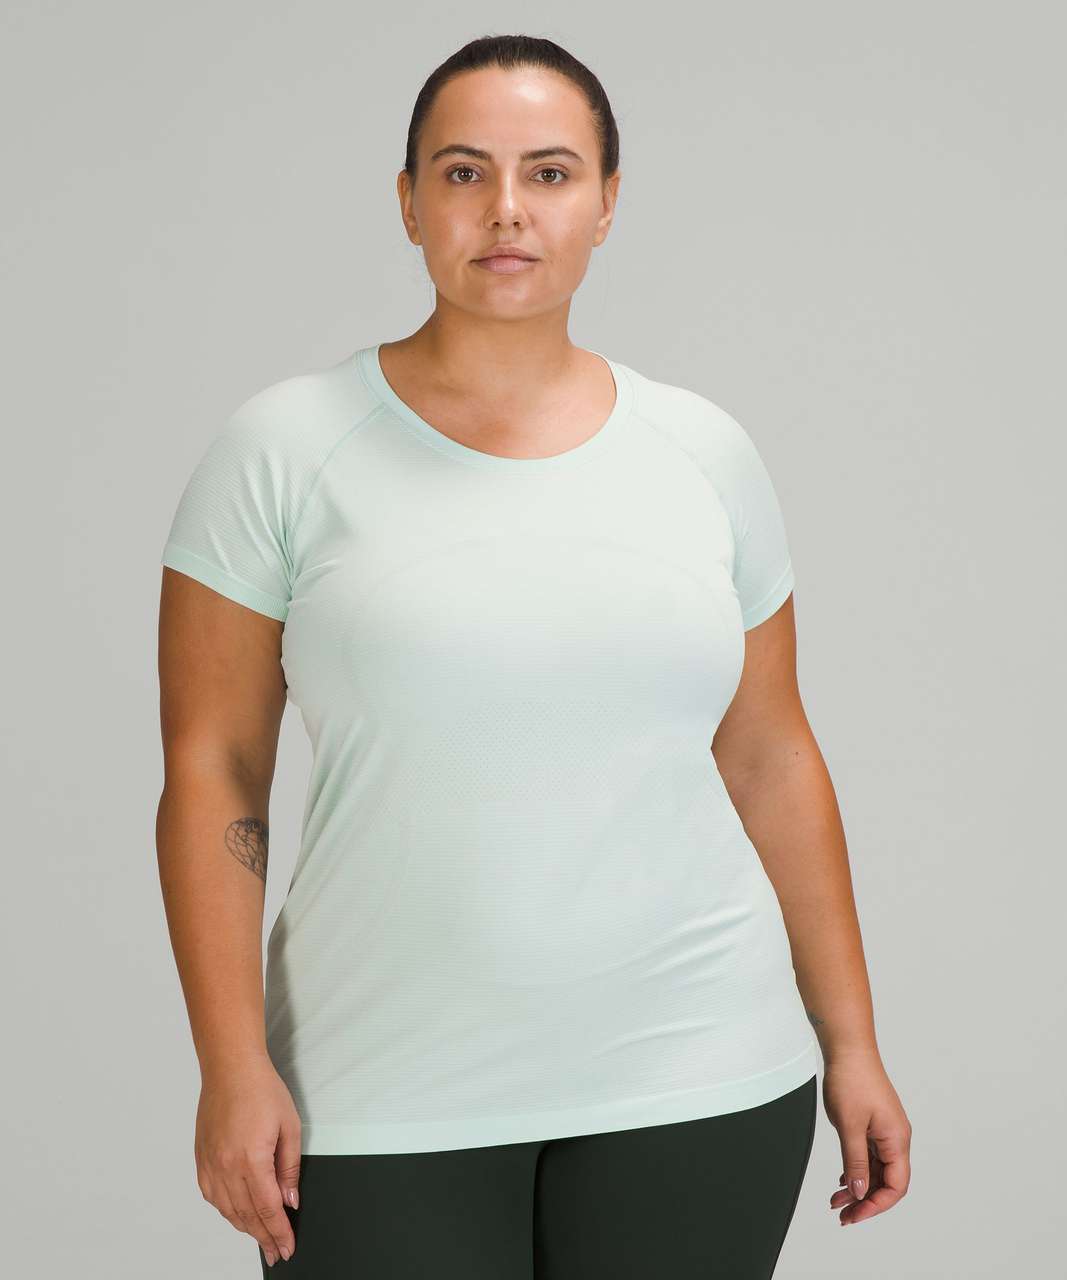 Lululemon Swiftly Tech Short Sleeve Shirt 2.0 - Delicate Mint